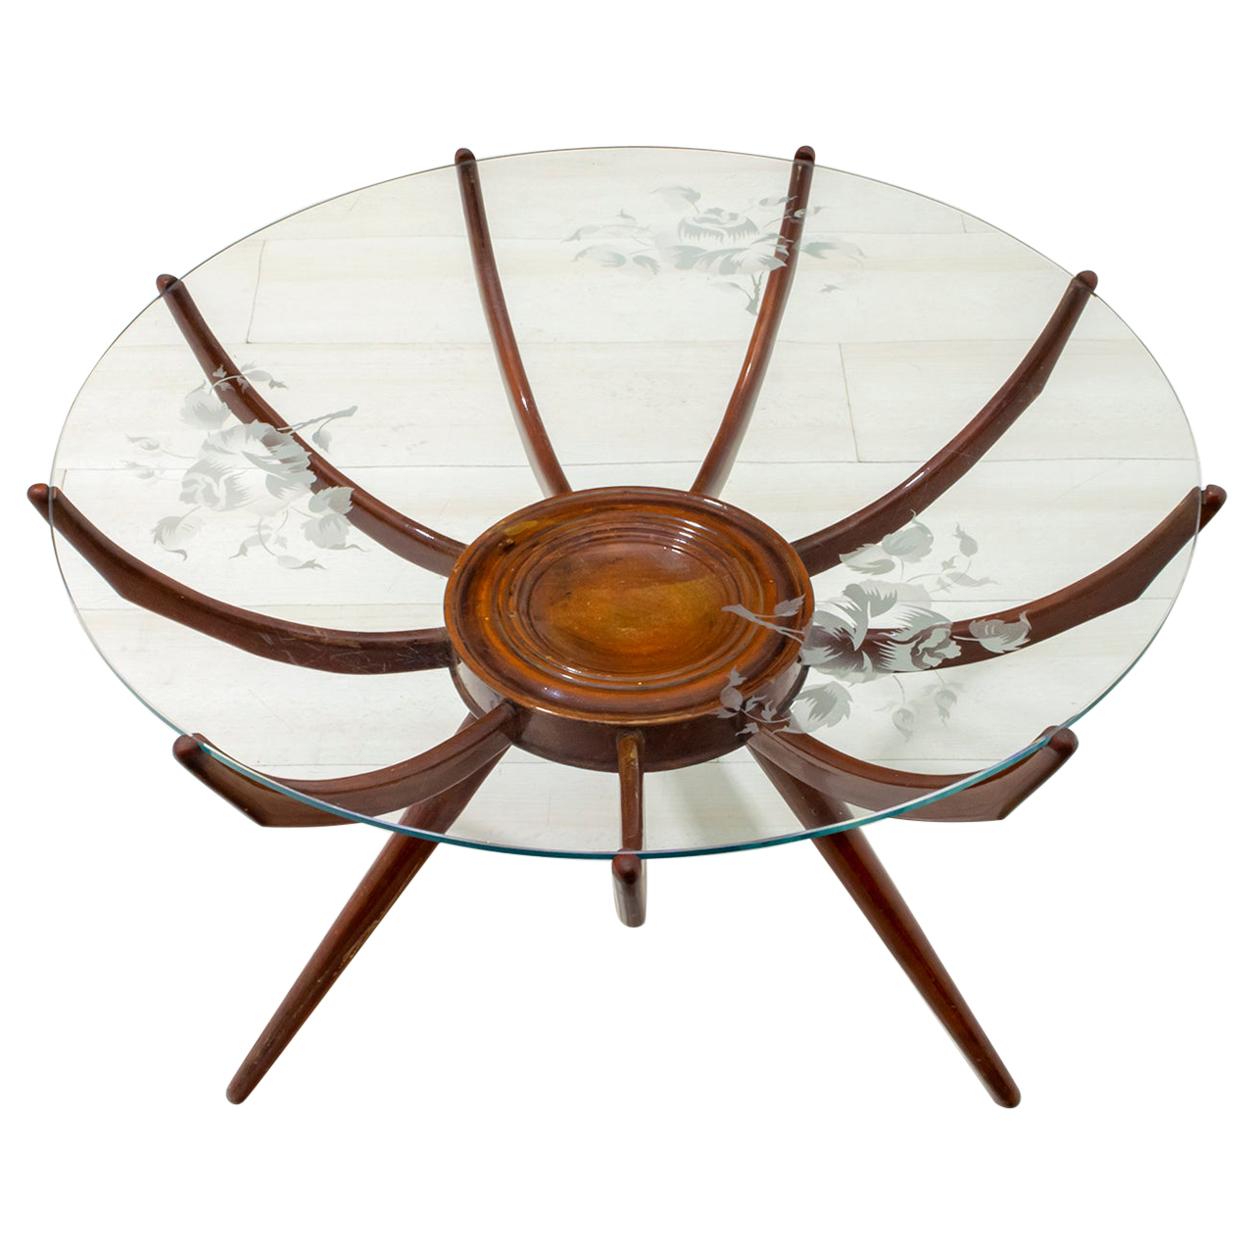 Carlo De Carli Mid-Century Modern Italian "Spider" Coffee Table, 1950